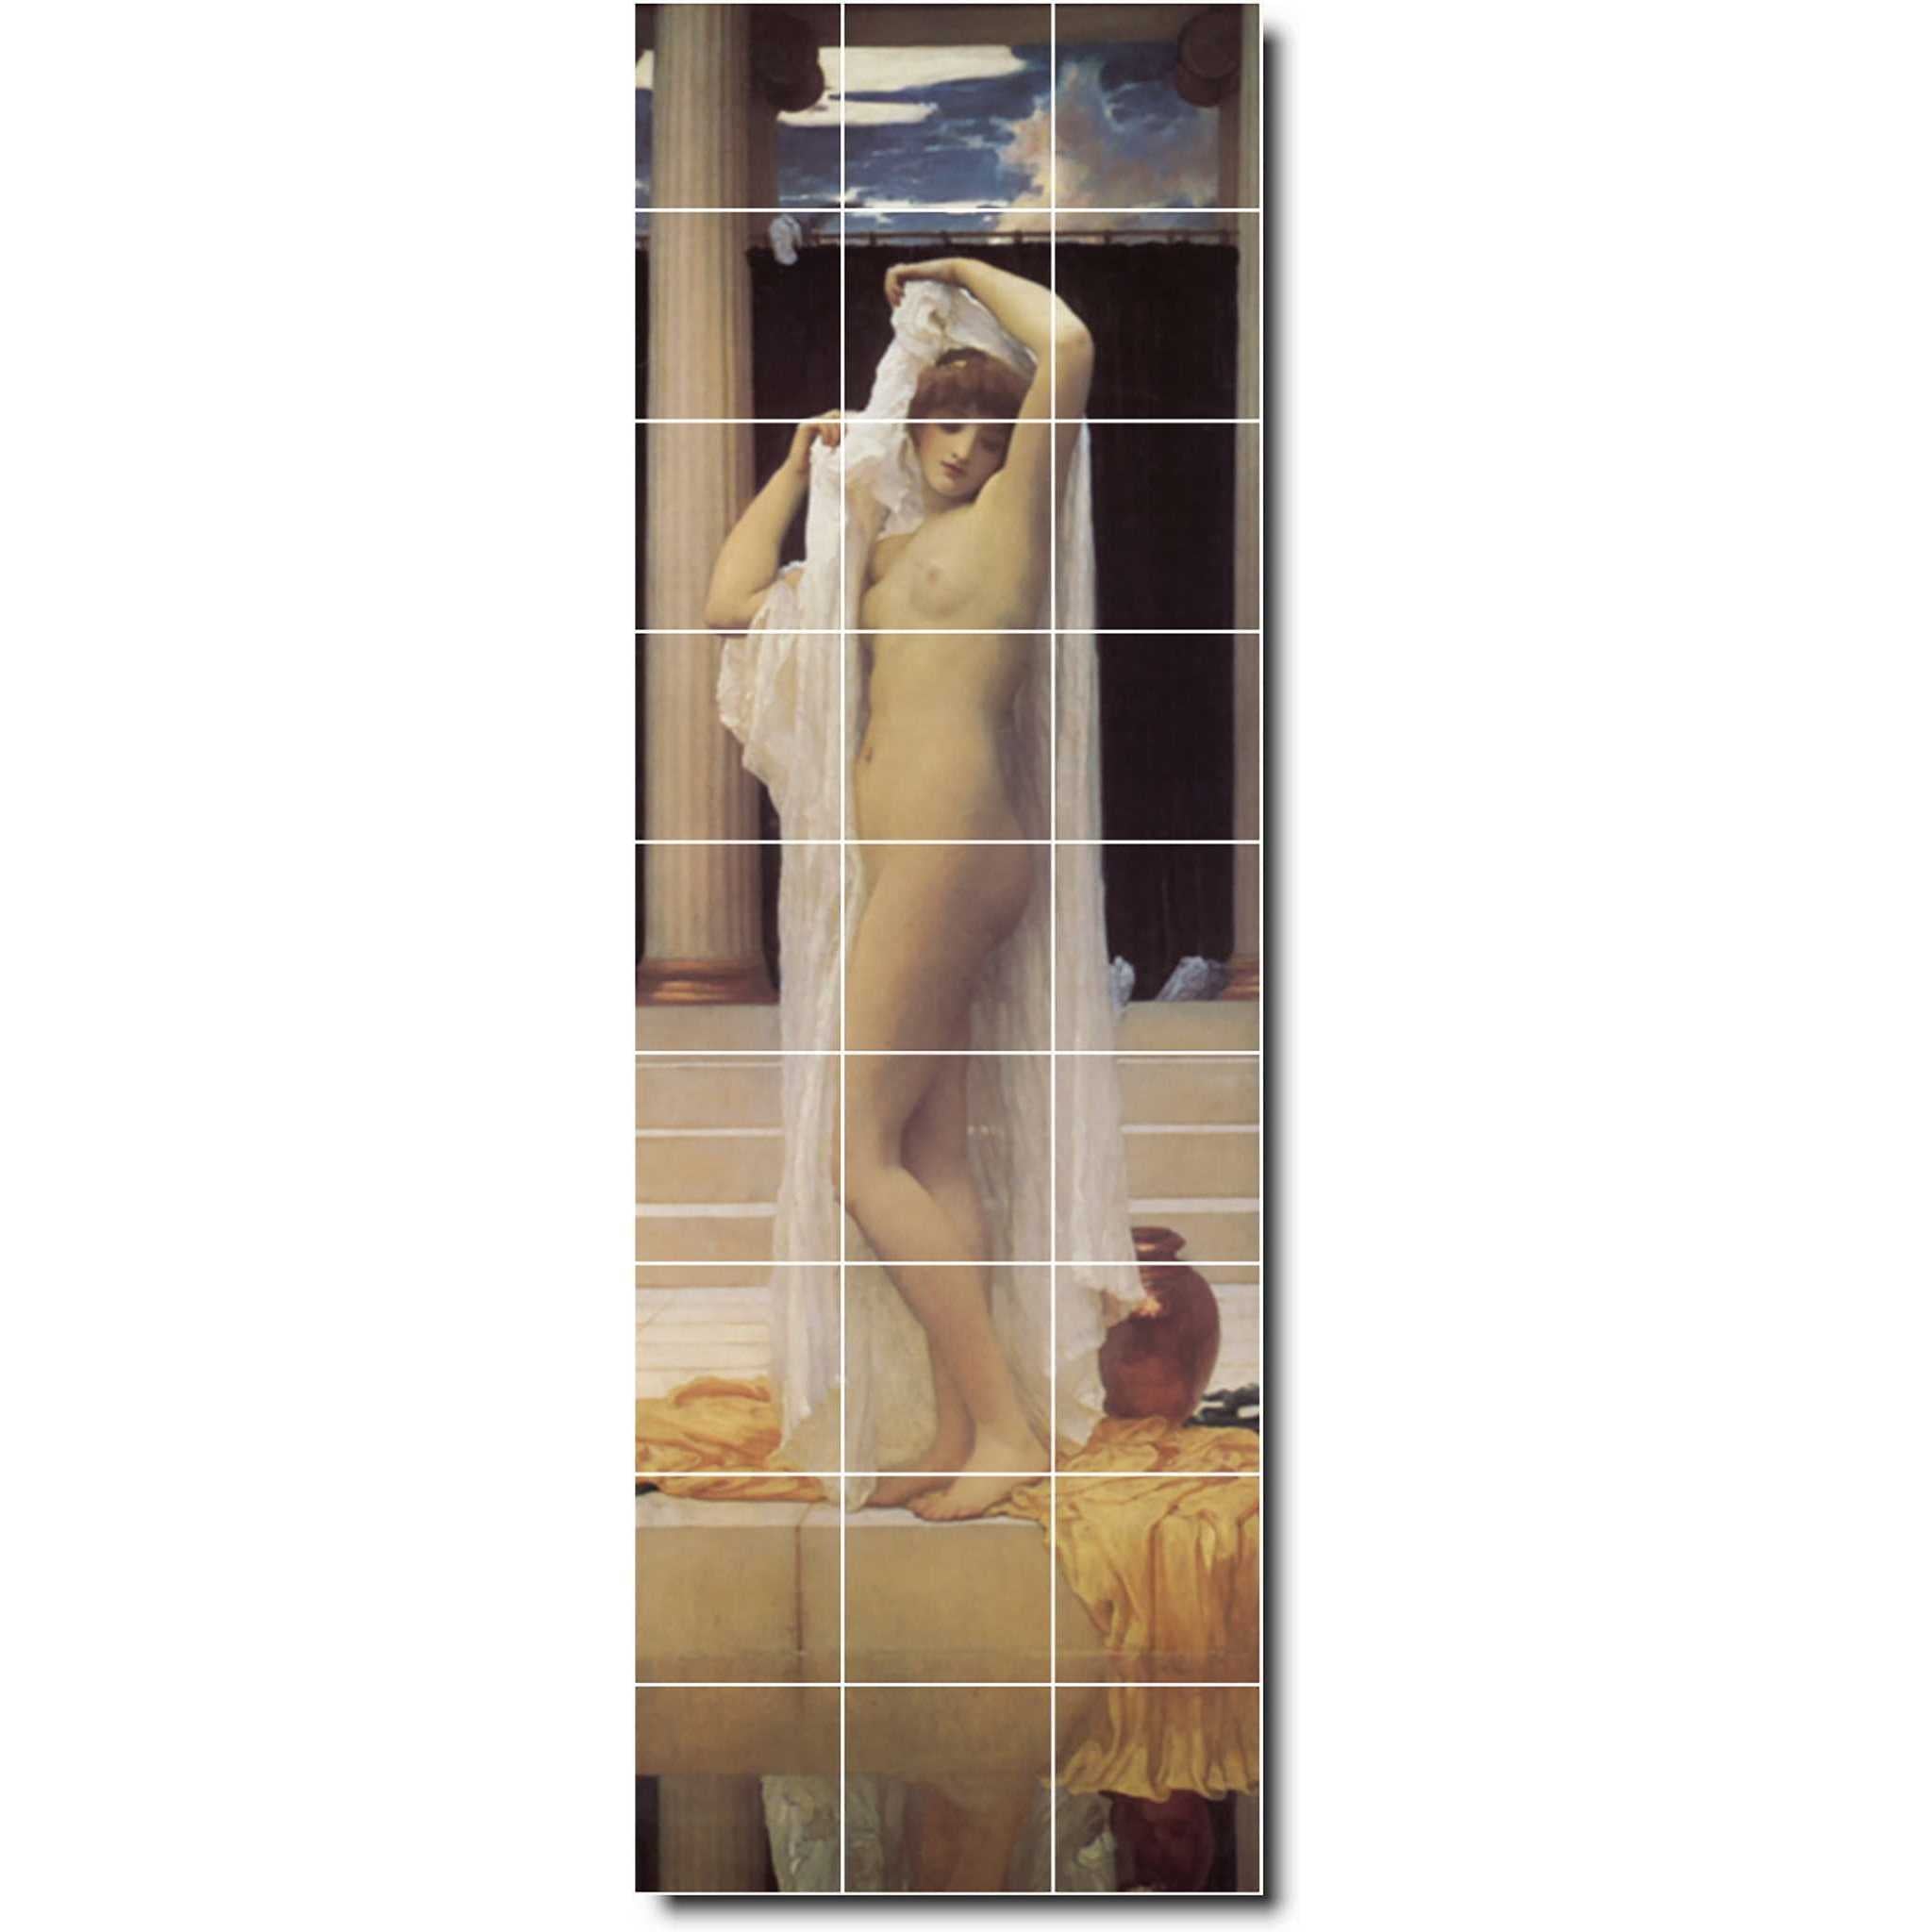 frederick leighton nude painting ceramic tile mural p05410